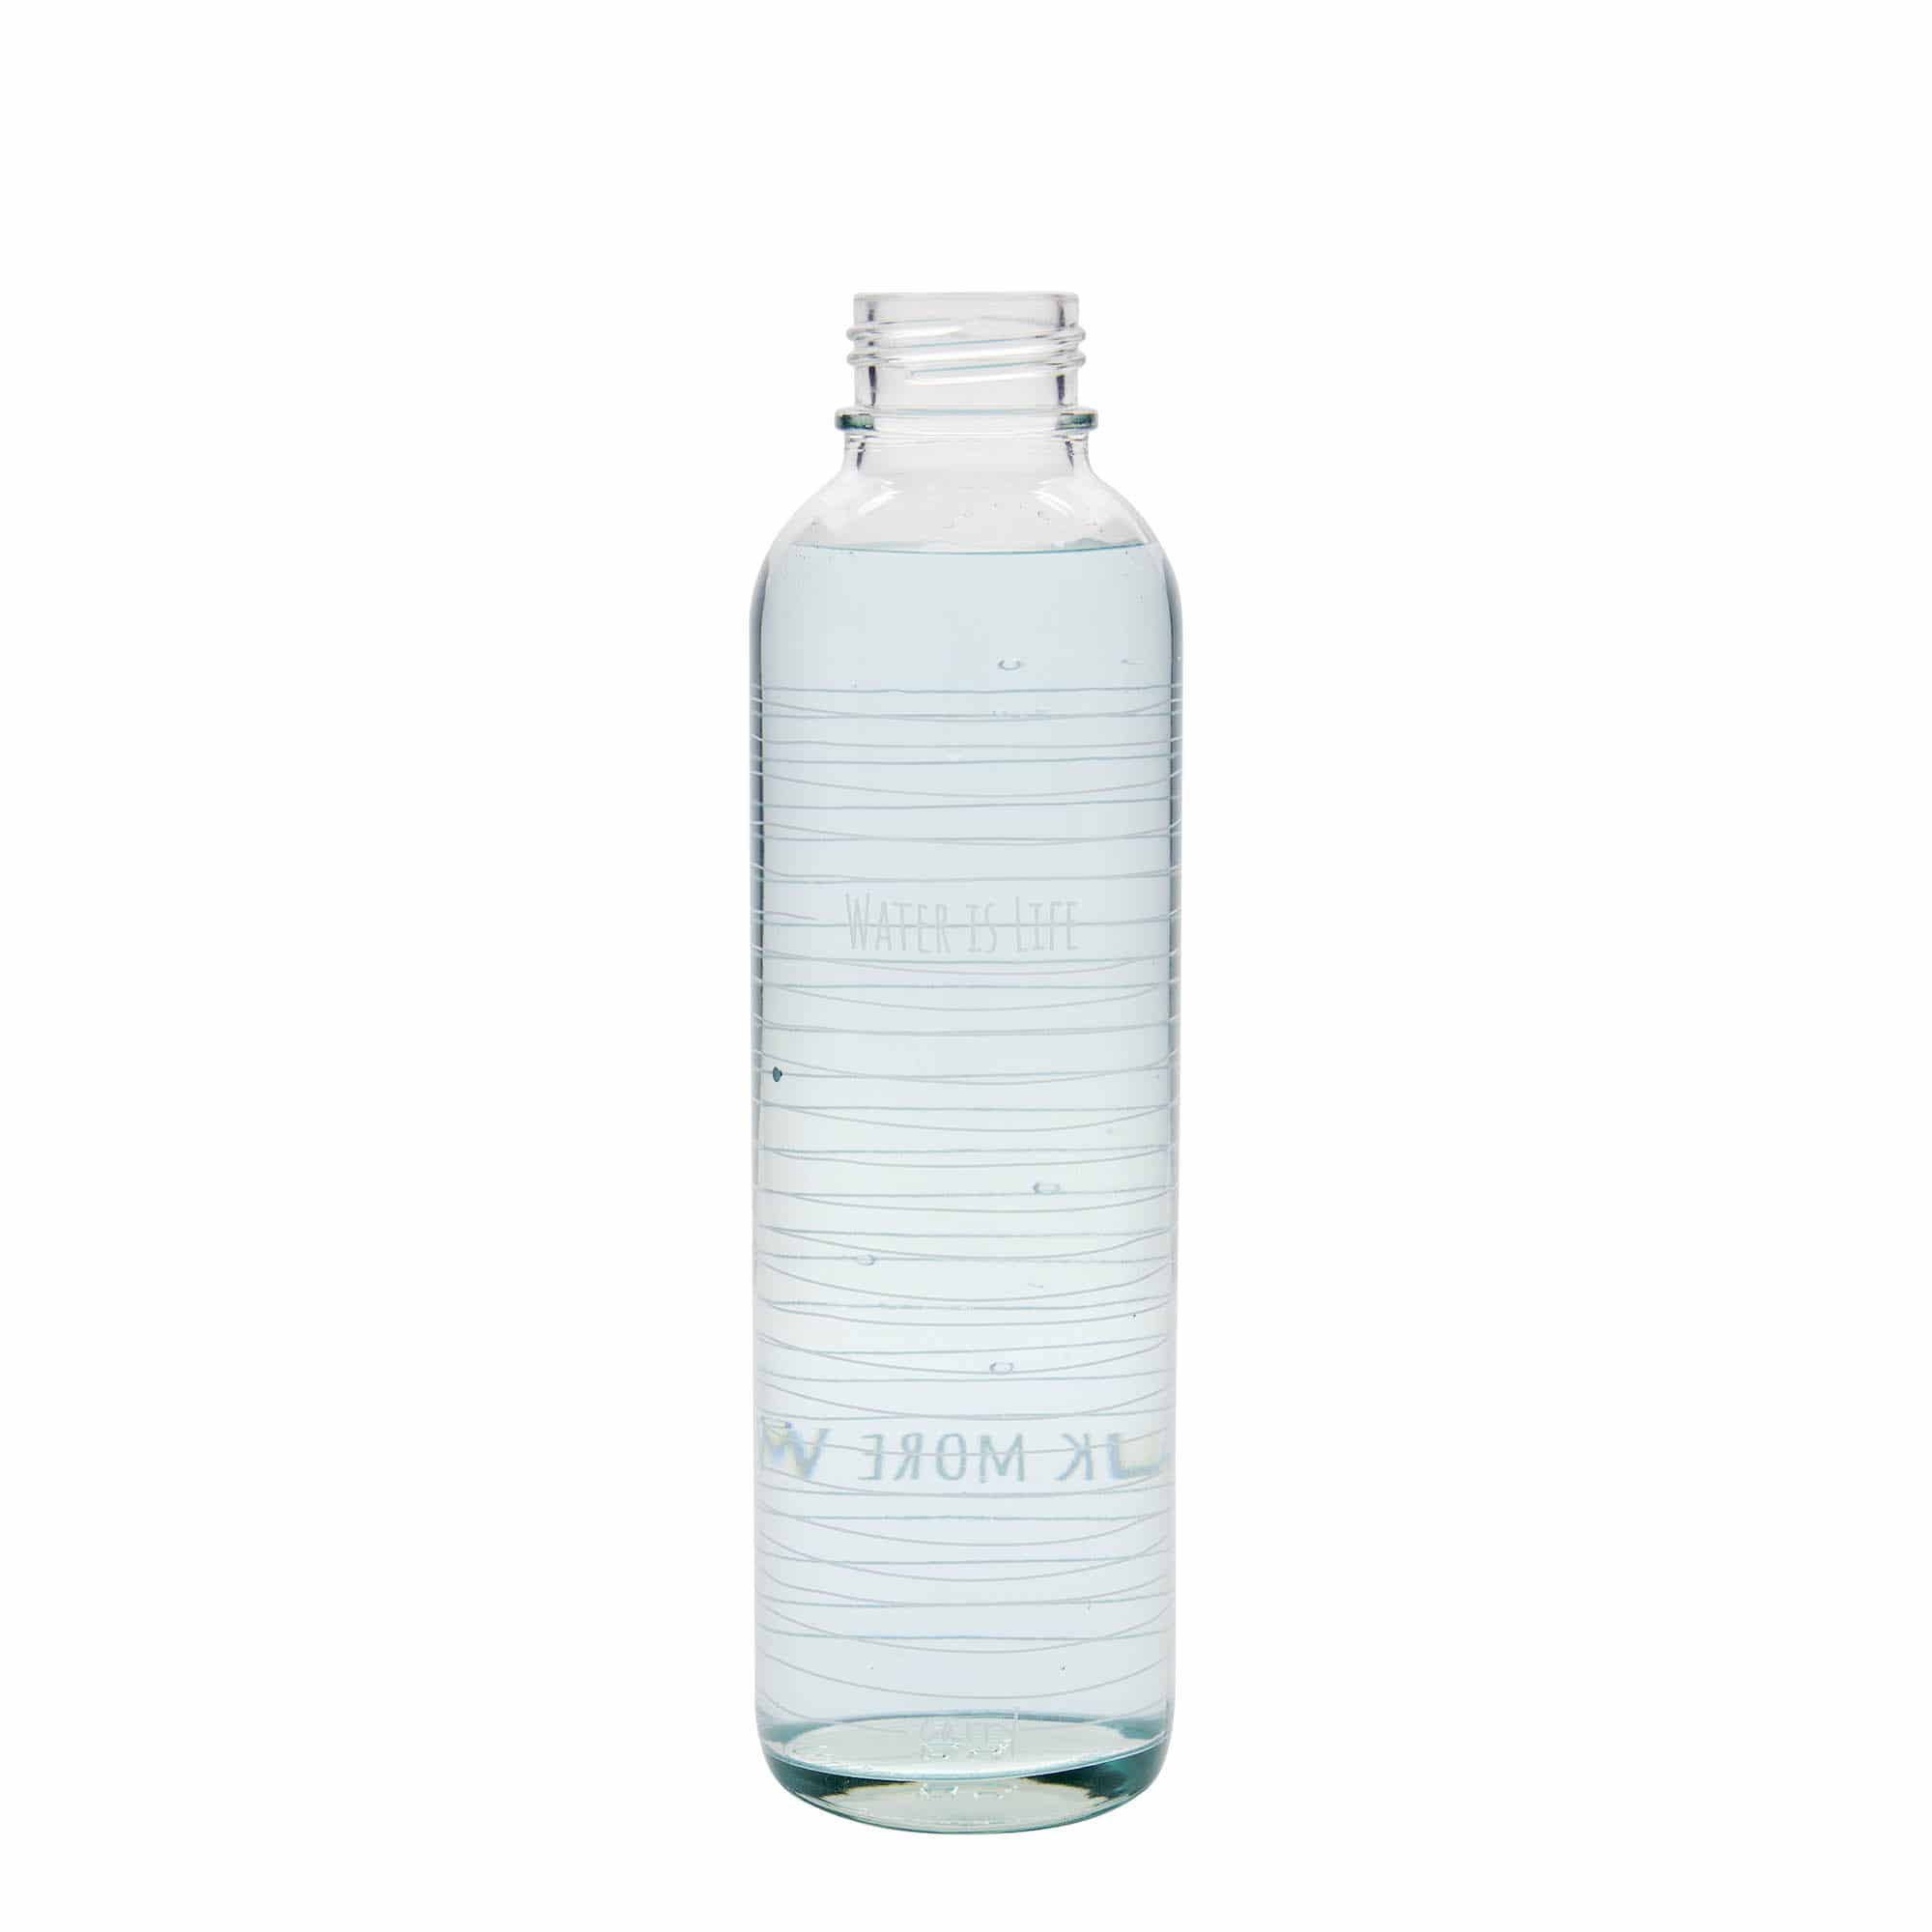 Drinkfles CARRY Bottle, 700 ml, motief: Water is Life, monding: schroefsluiting